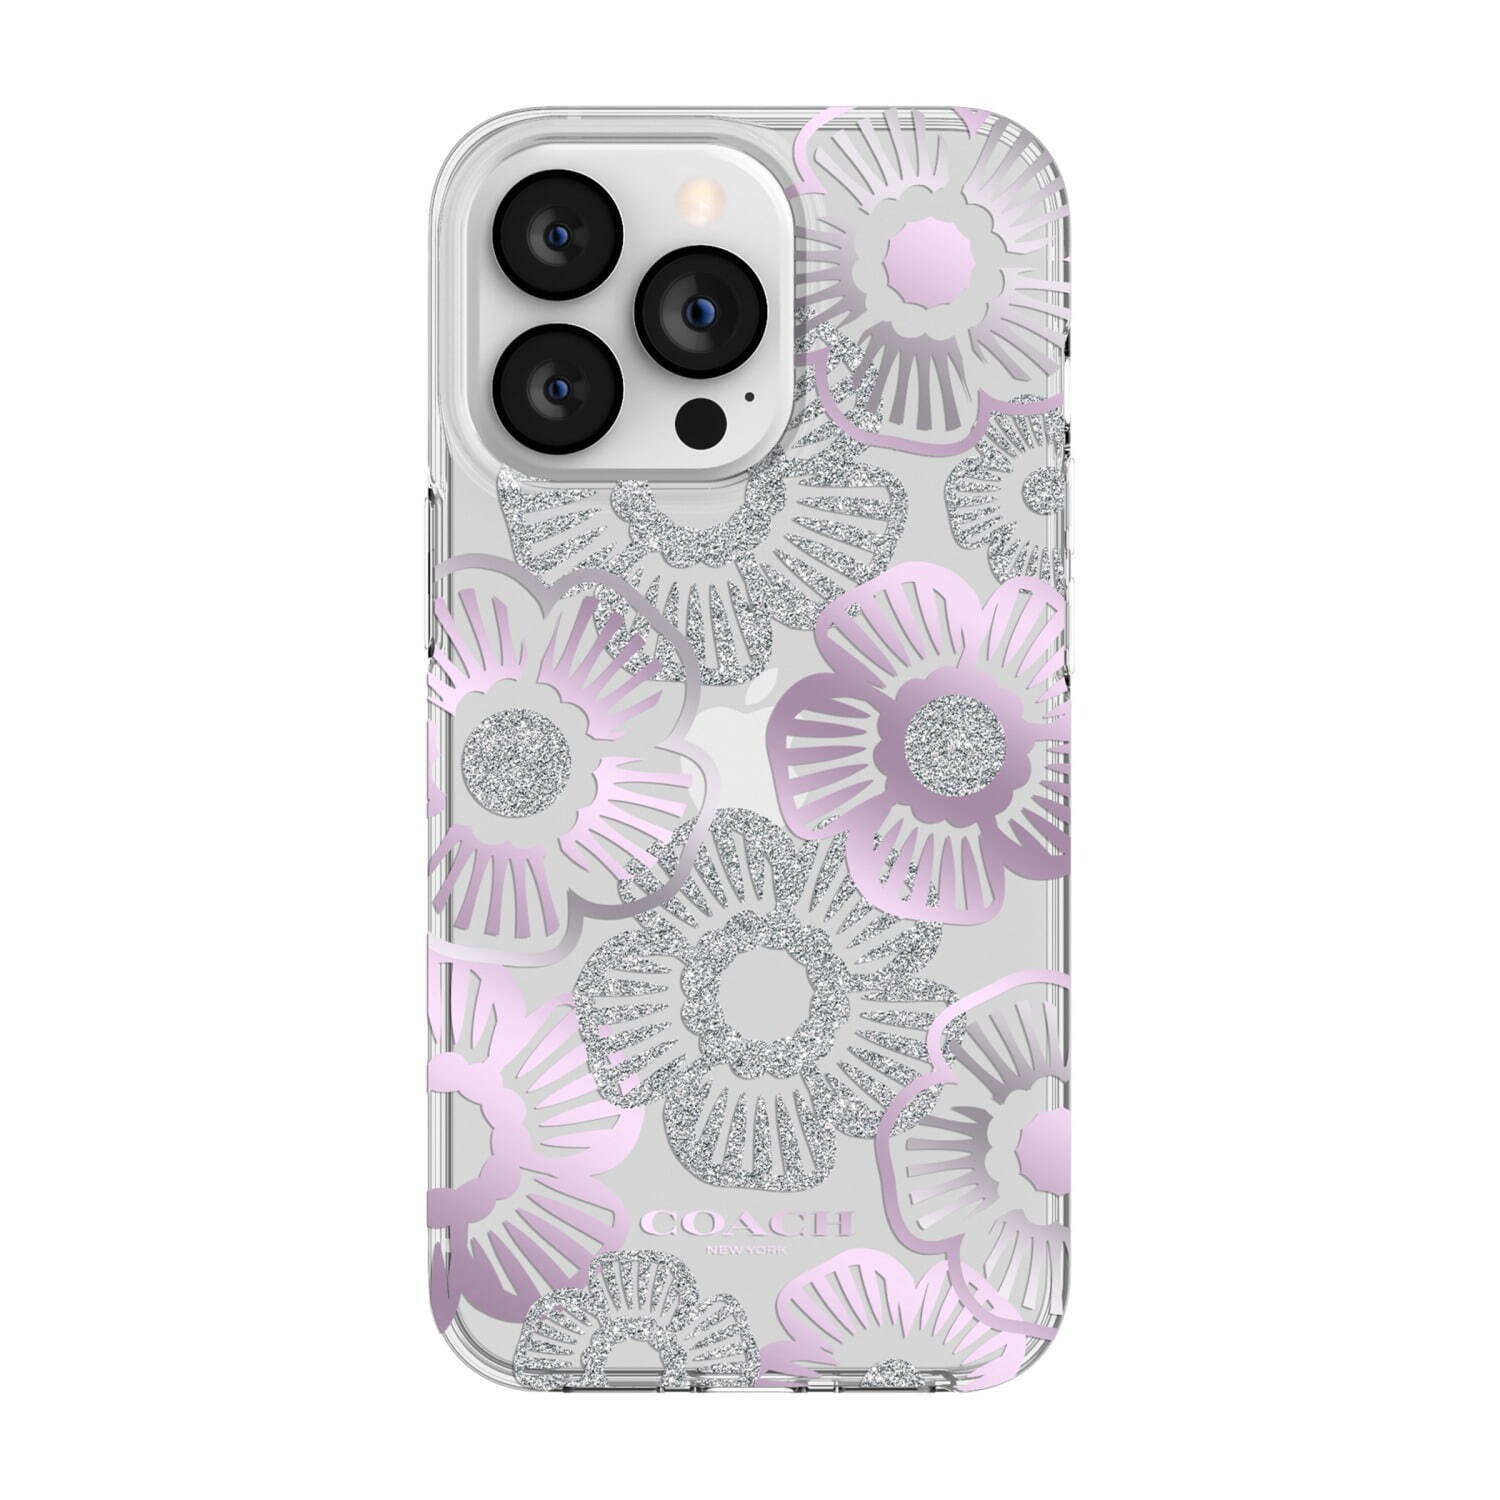 Protective Case 5,280円(参考価格)
「Tea Rose Purple」はiPhone 13 Pro/iPhone 13 Pro Max/iPhone 13に対応